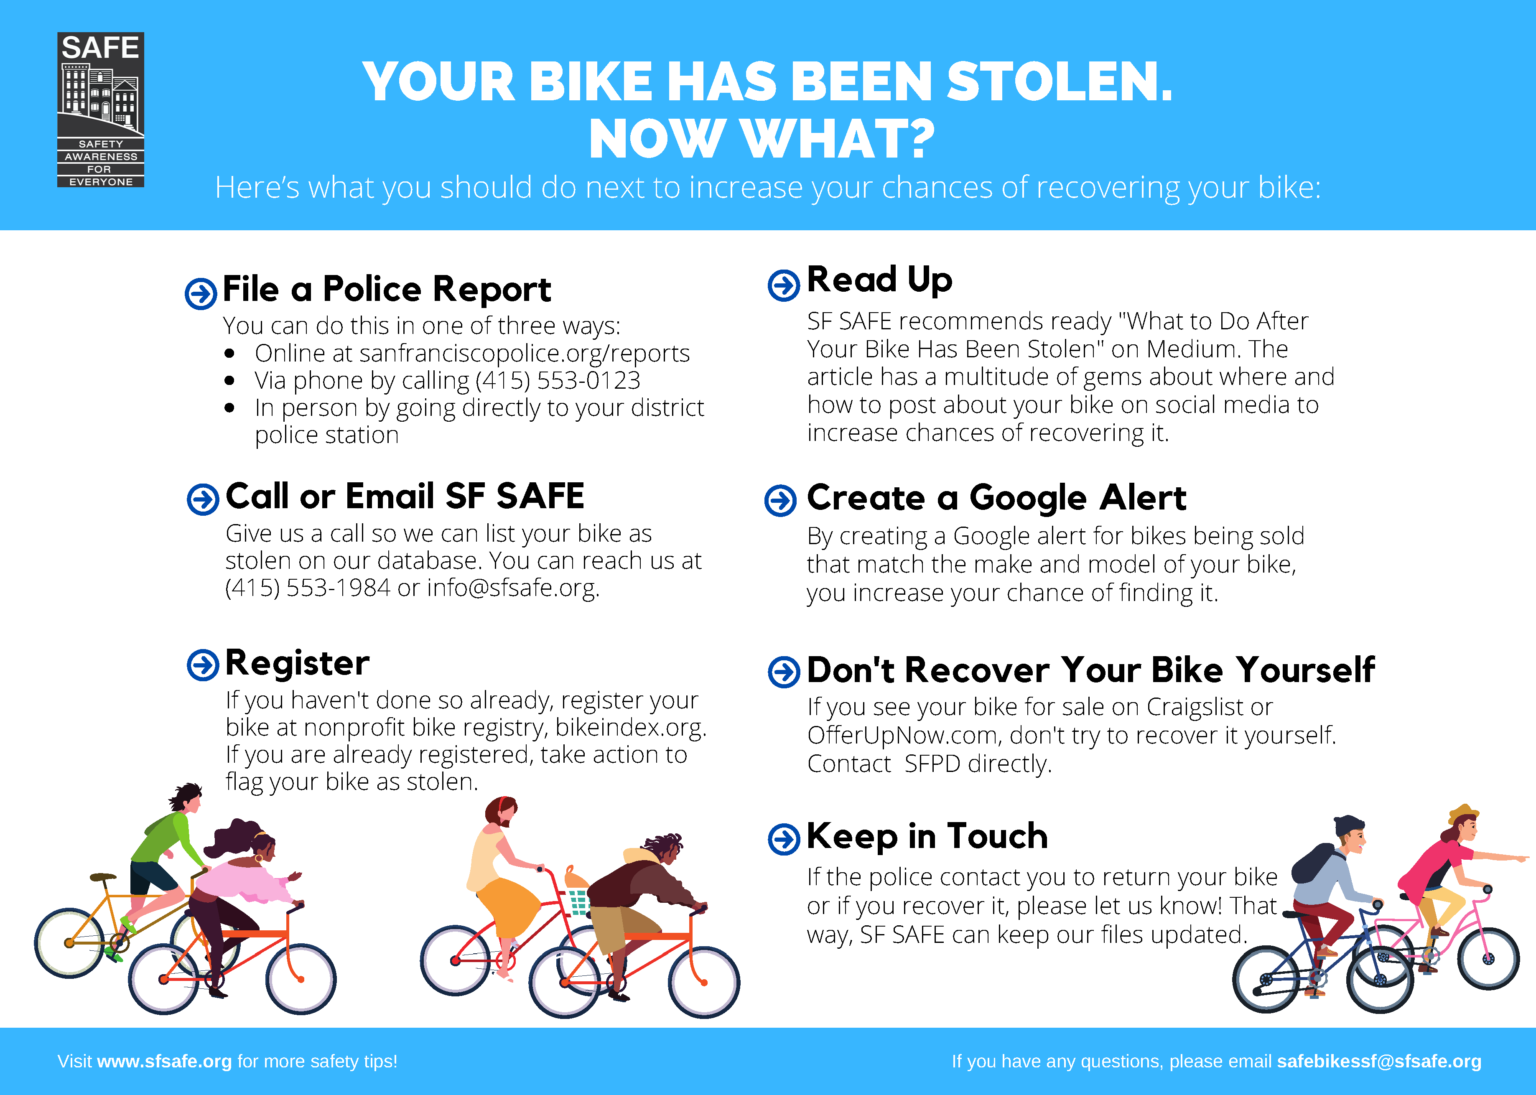 This bike is mine. Bike was stolen. Being a Bike игра. Recover Bike. Stolen your Bike.